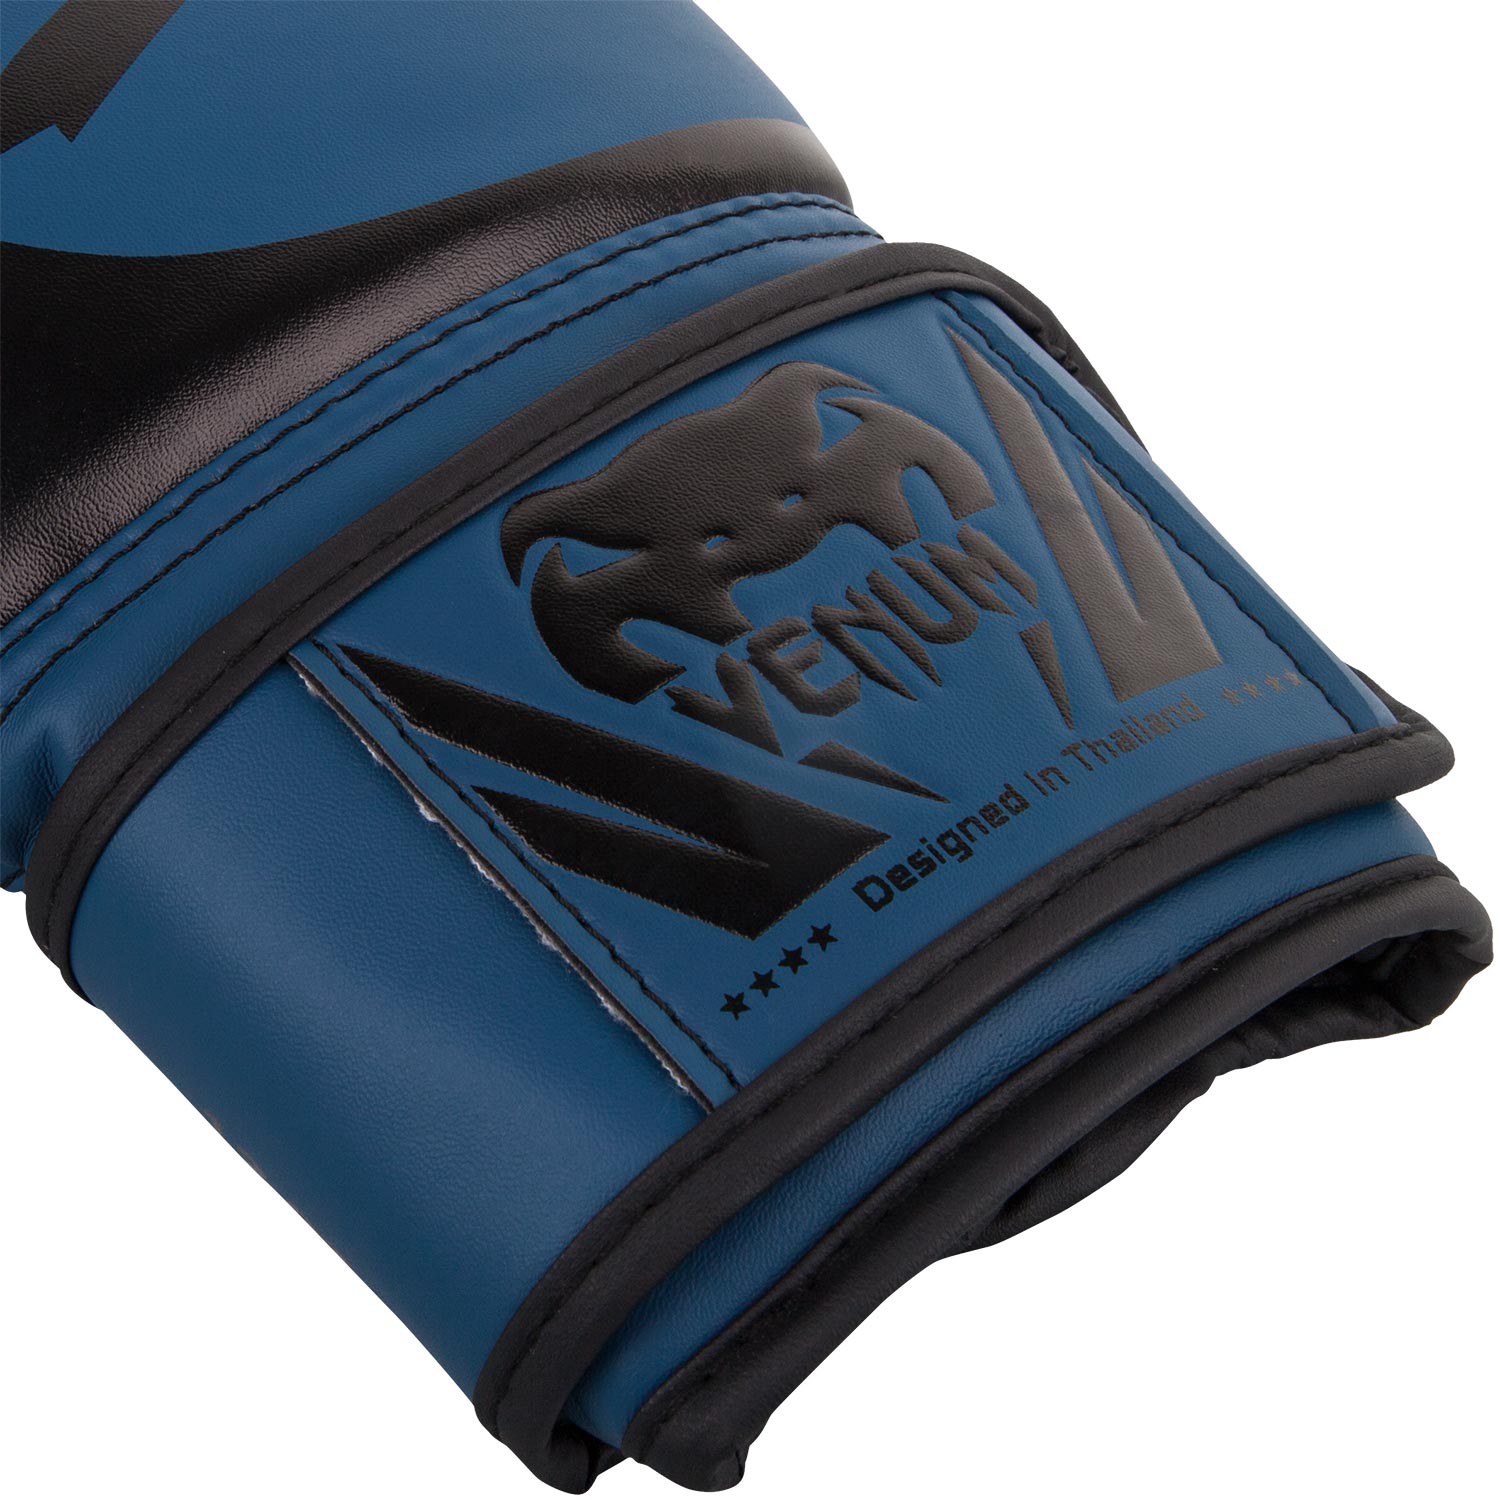 Перчатки боксерские Venum Challenger 2.0 Navy/Black